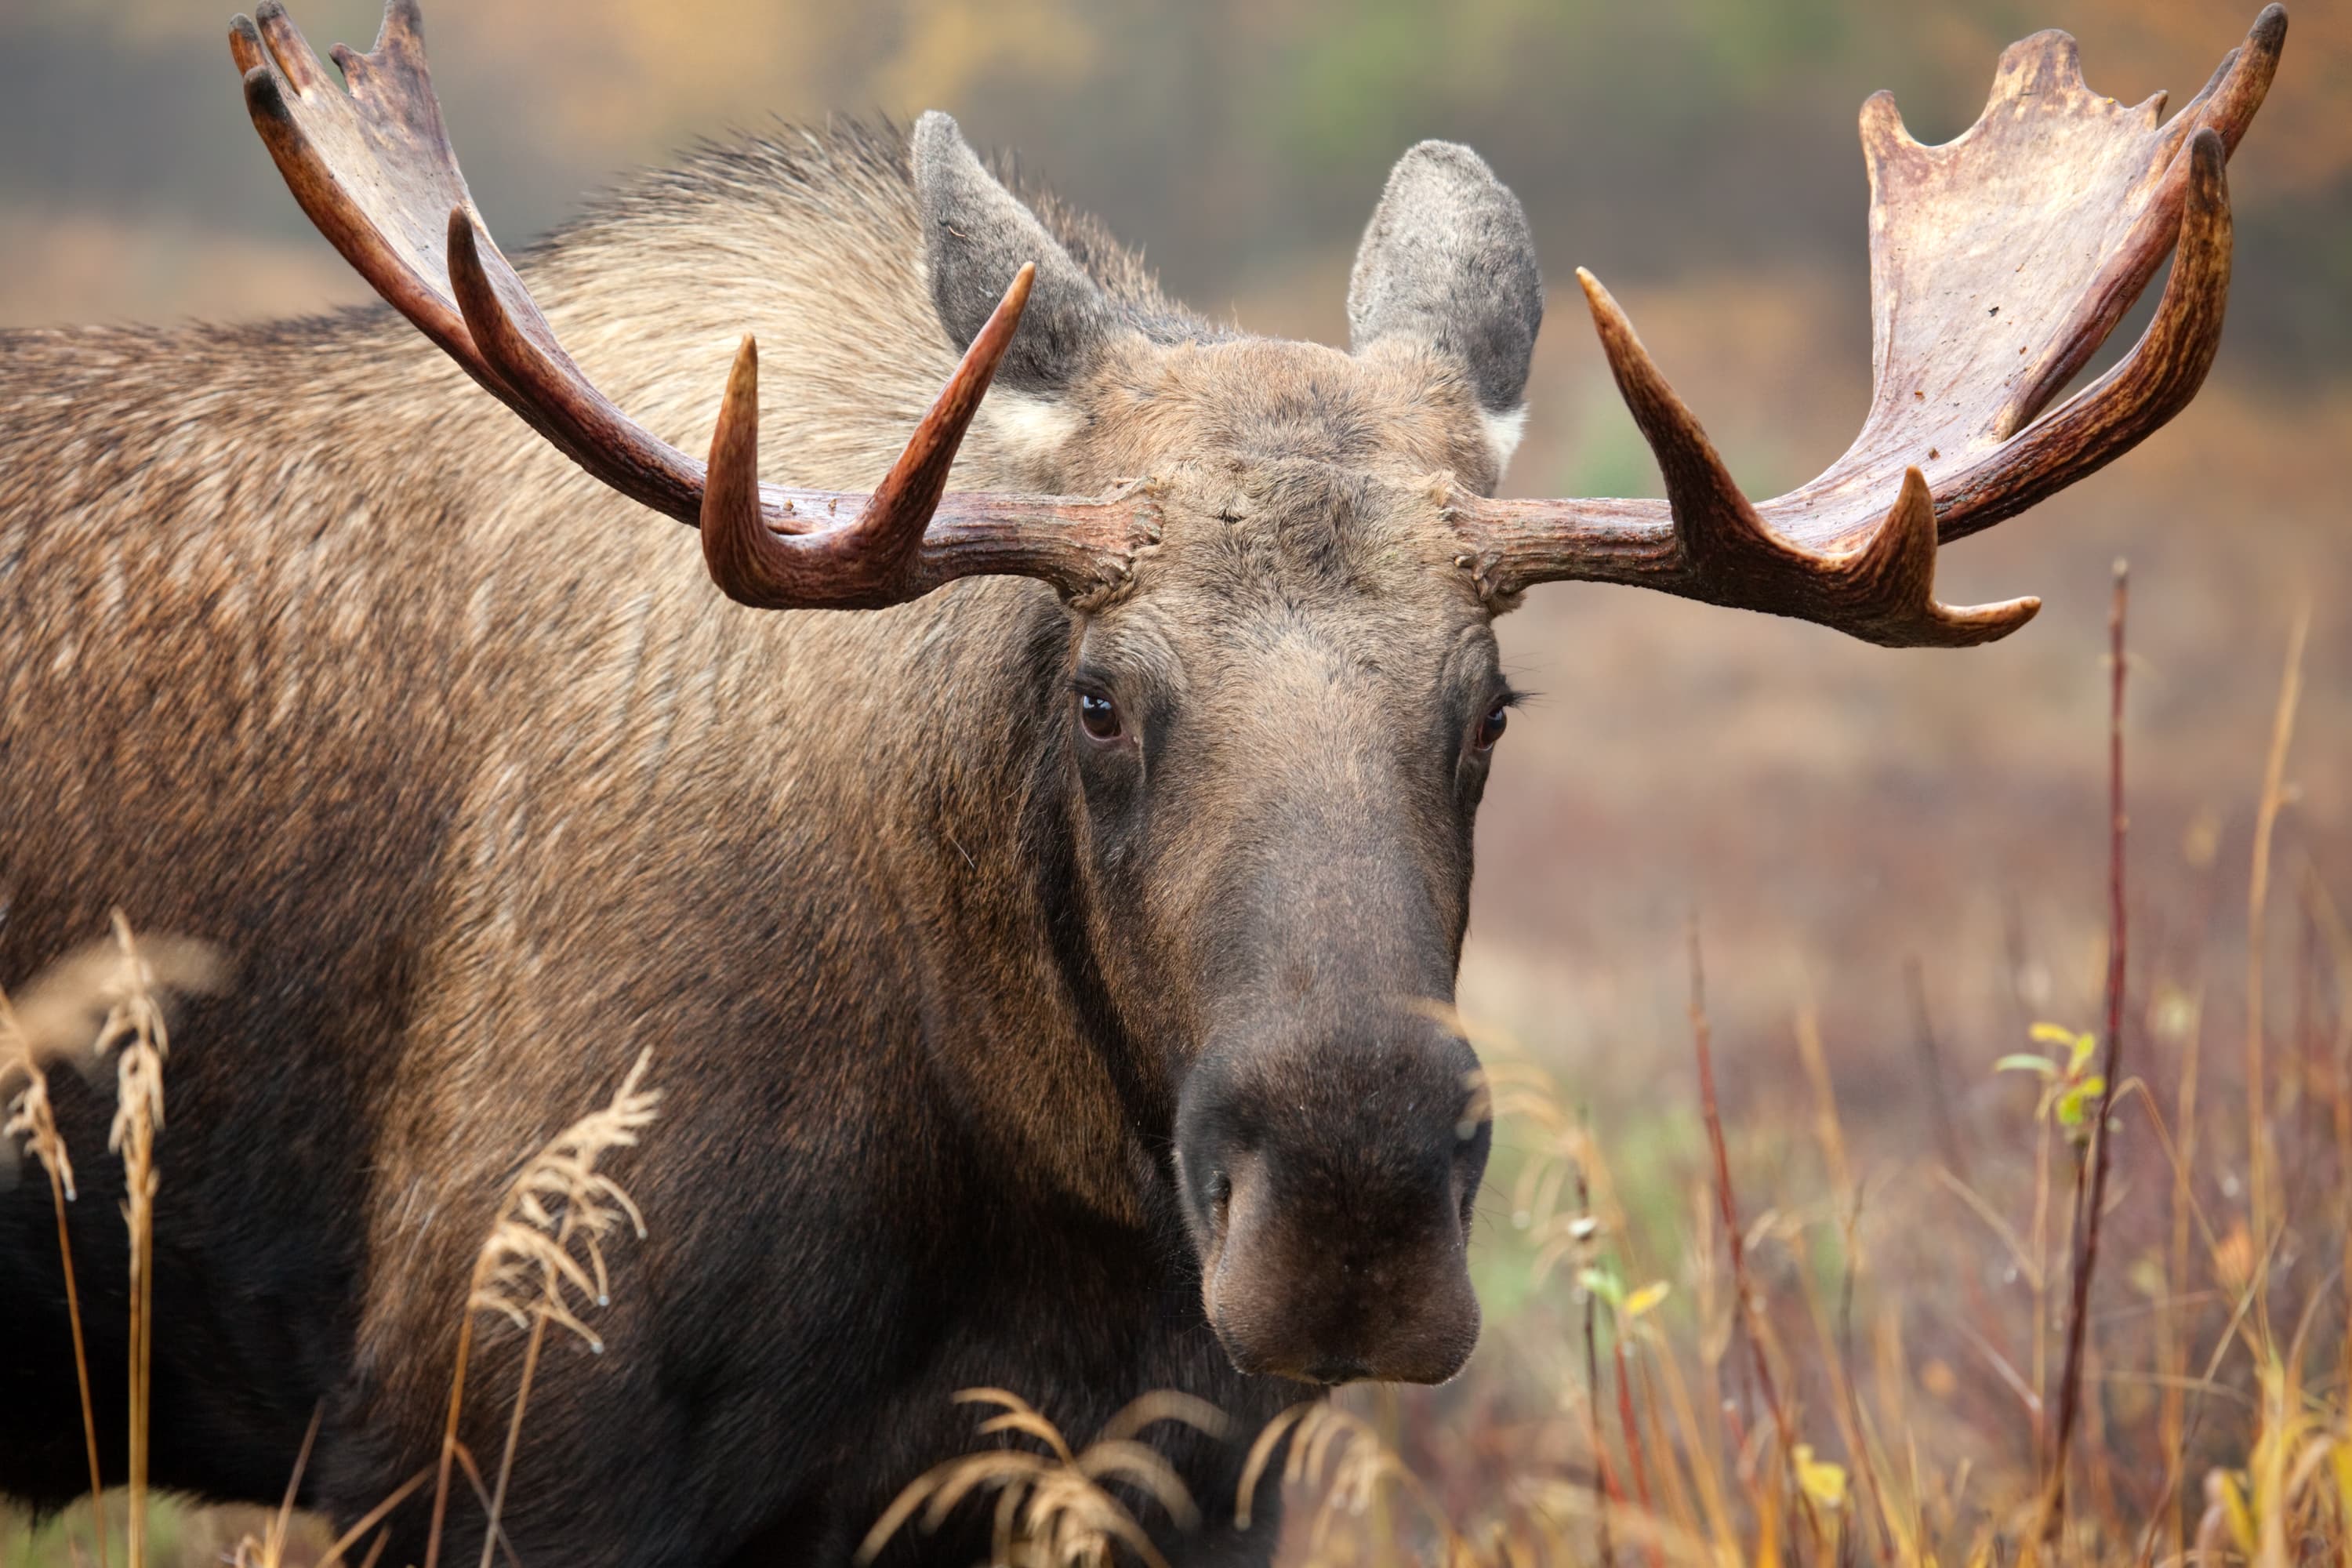 close up of a moose